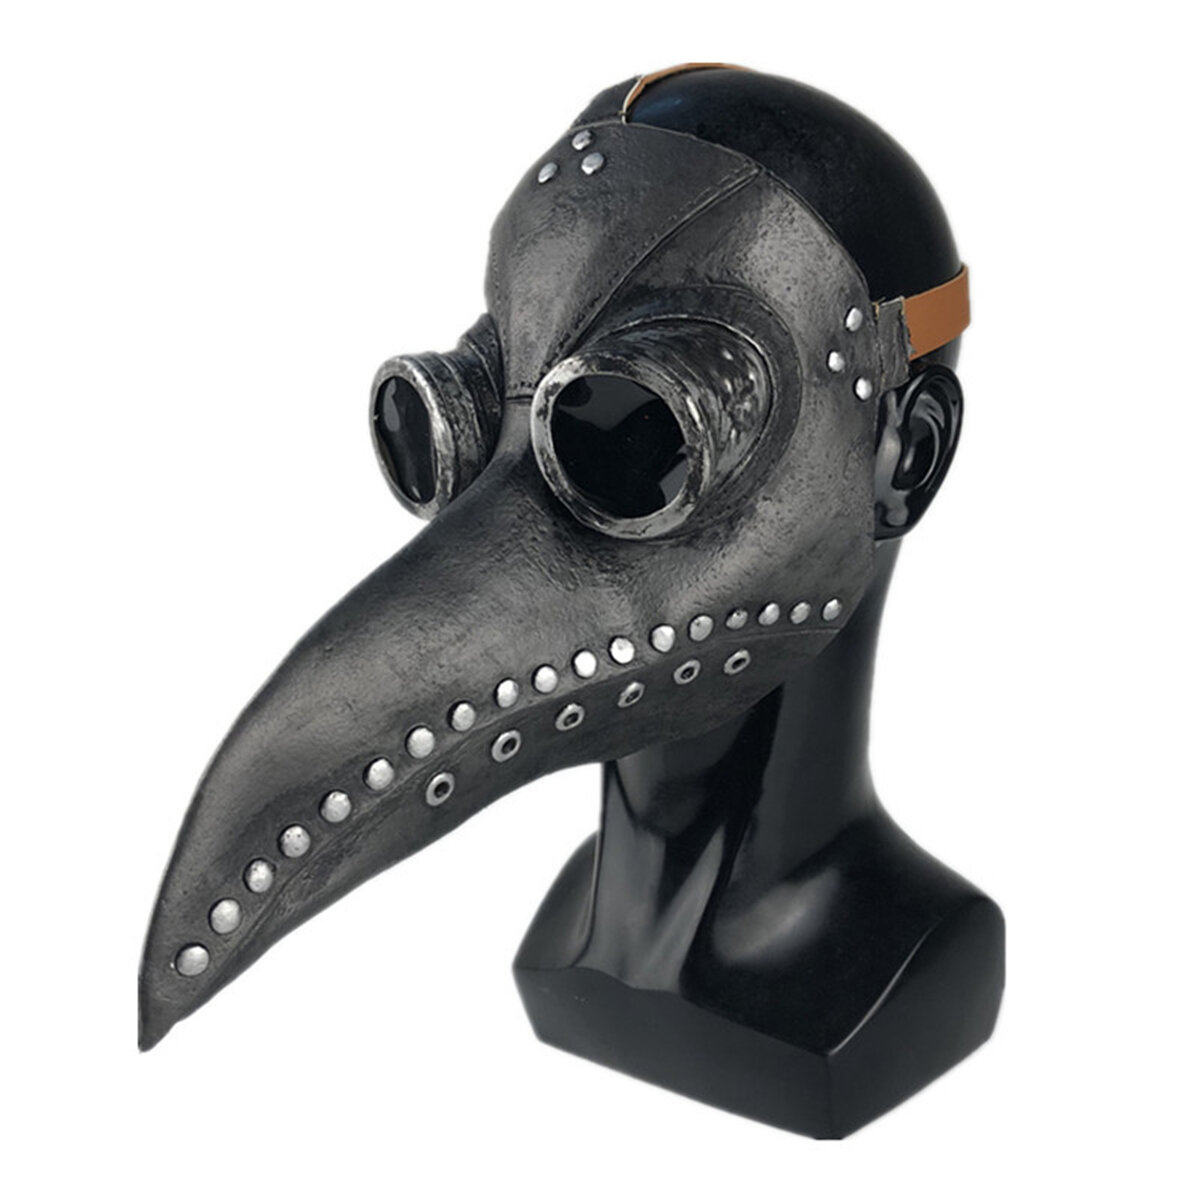 Maska lekarza dżumy plague doctor mask za $10.99 / ~46zł